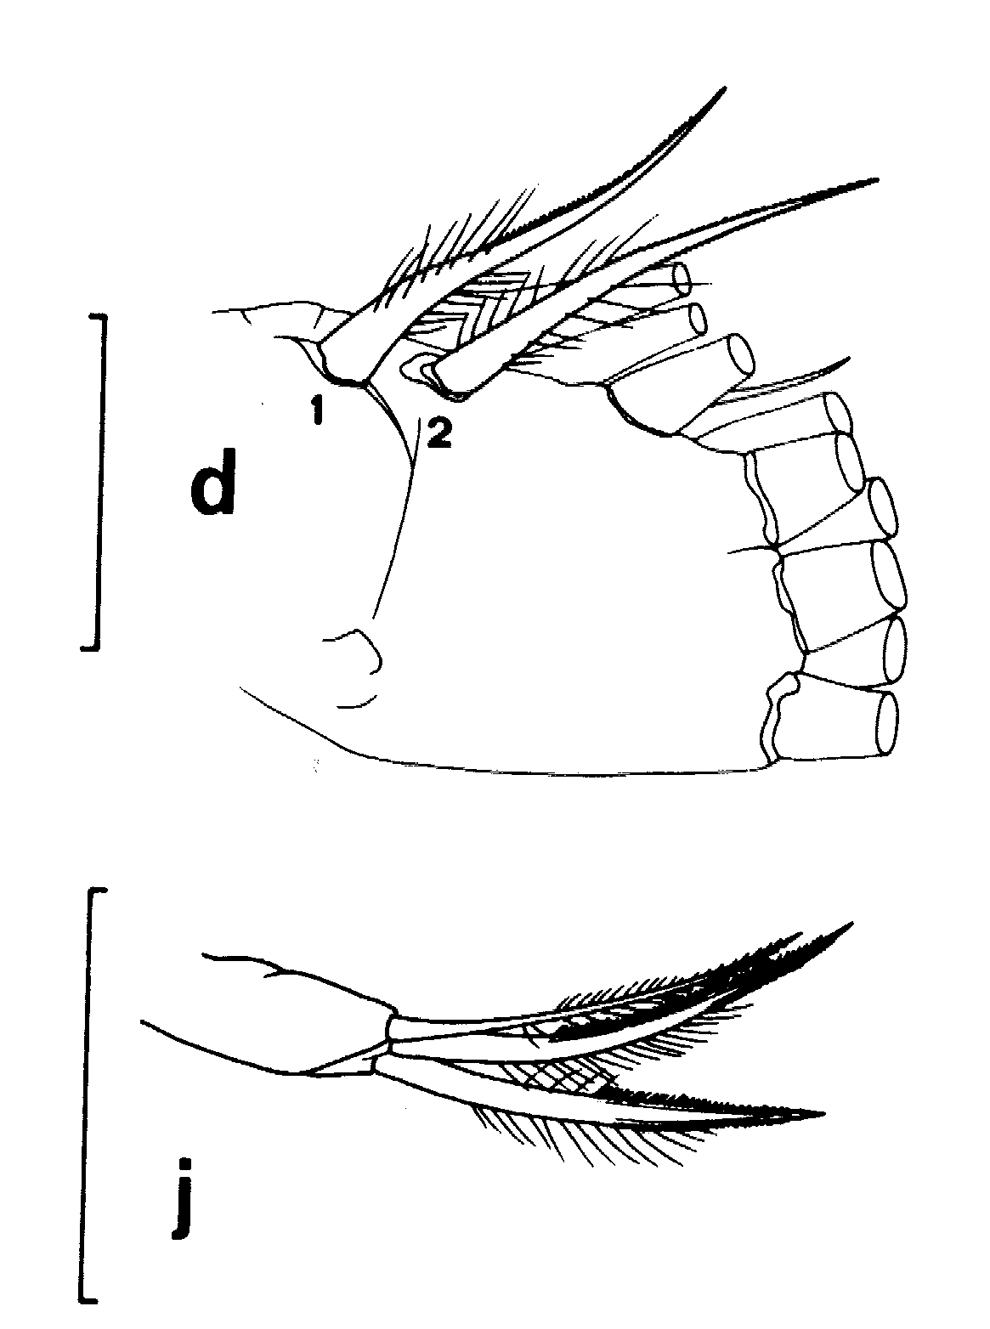 Species Euchirella bella - Plate 15 of morphological figures